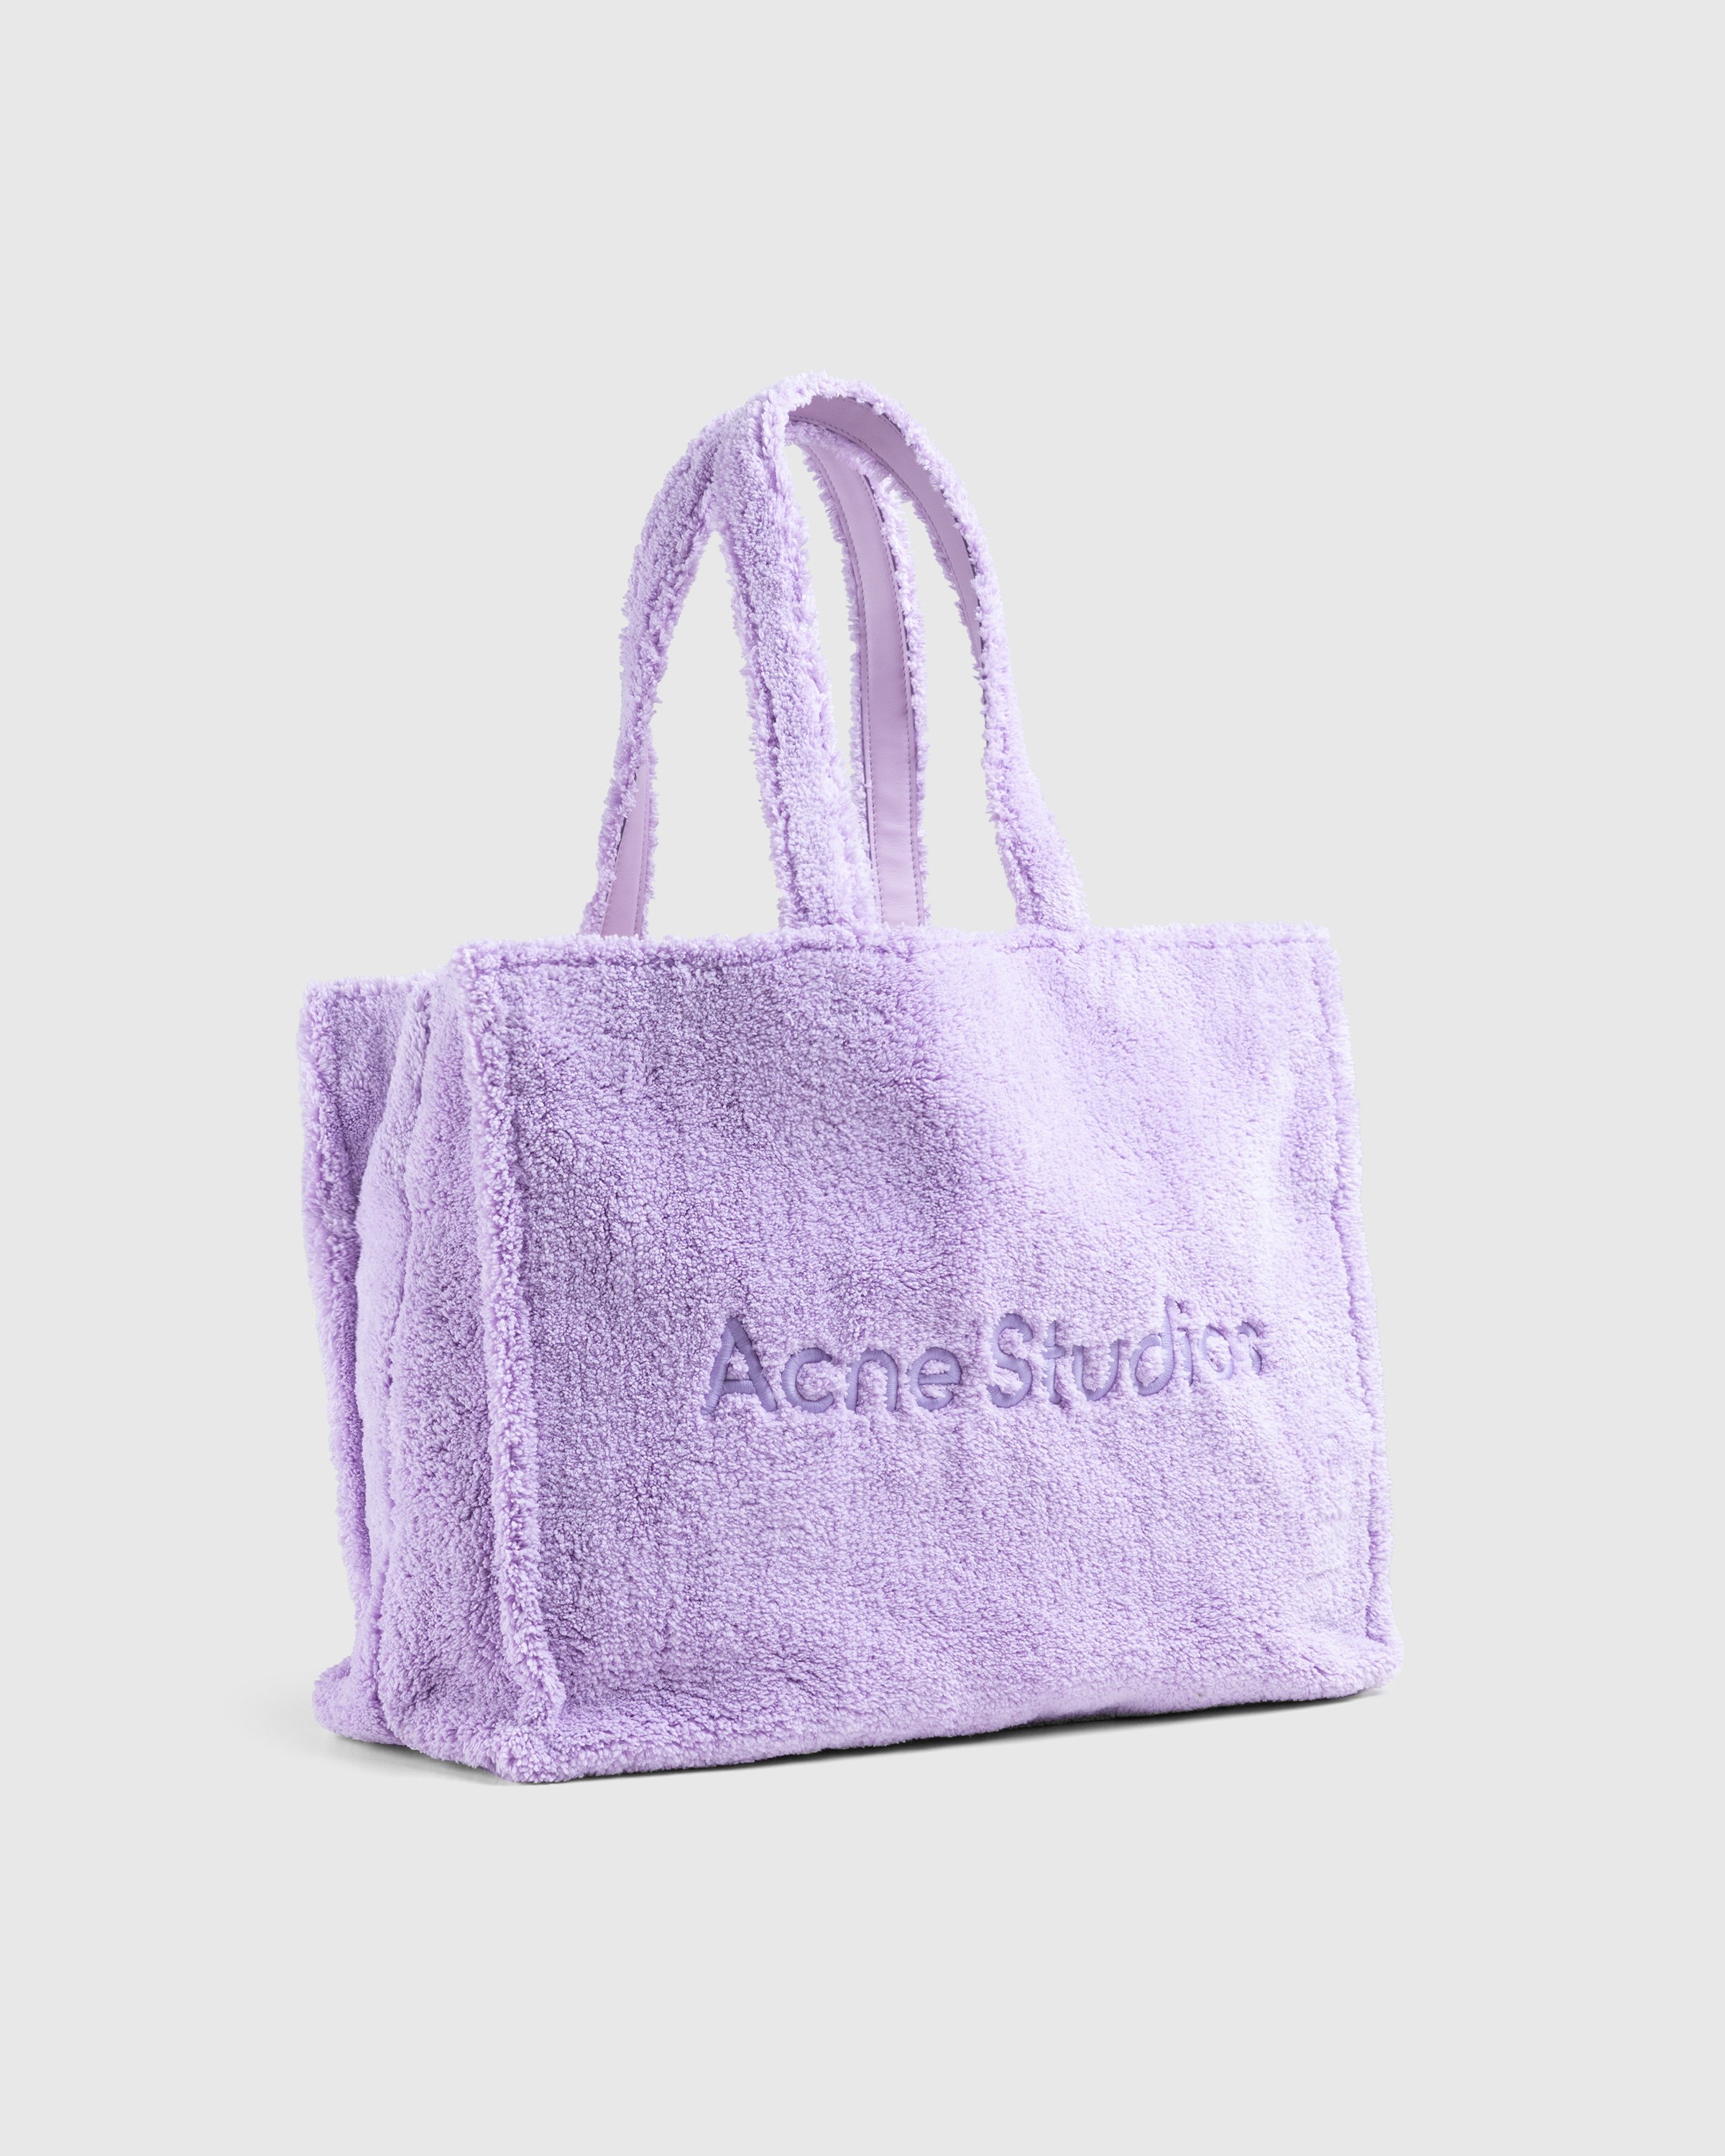 Acne Studios - Furry Logo Shoulder Tote Bag Lilac Purple - Accessories - Purple - Image 3